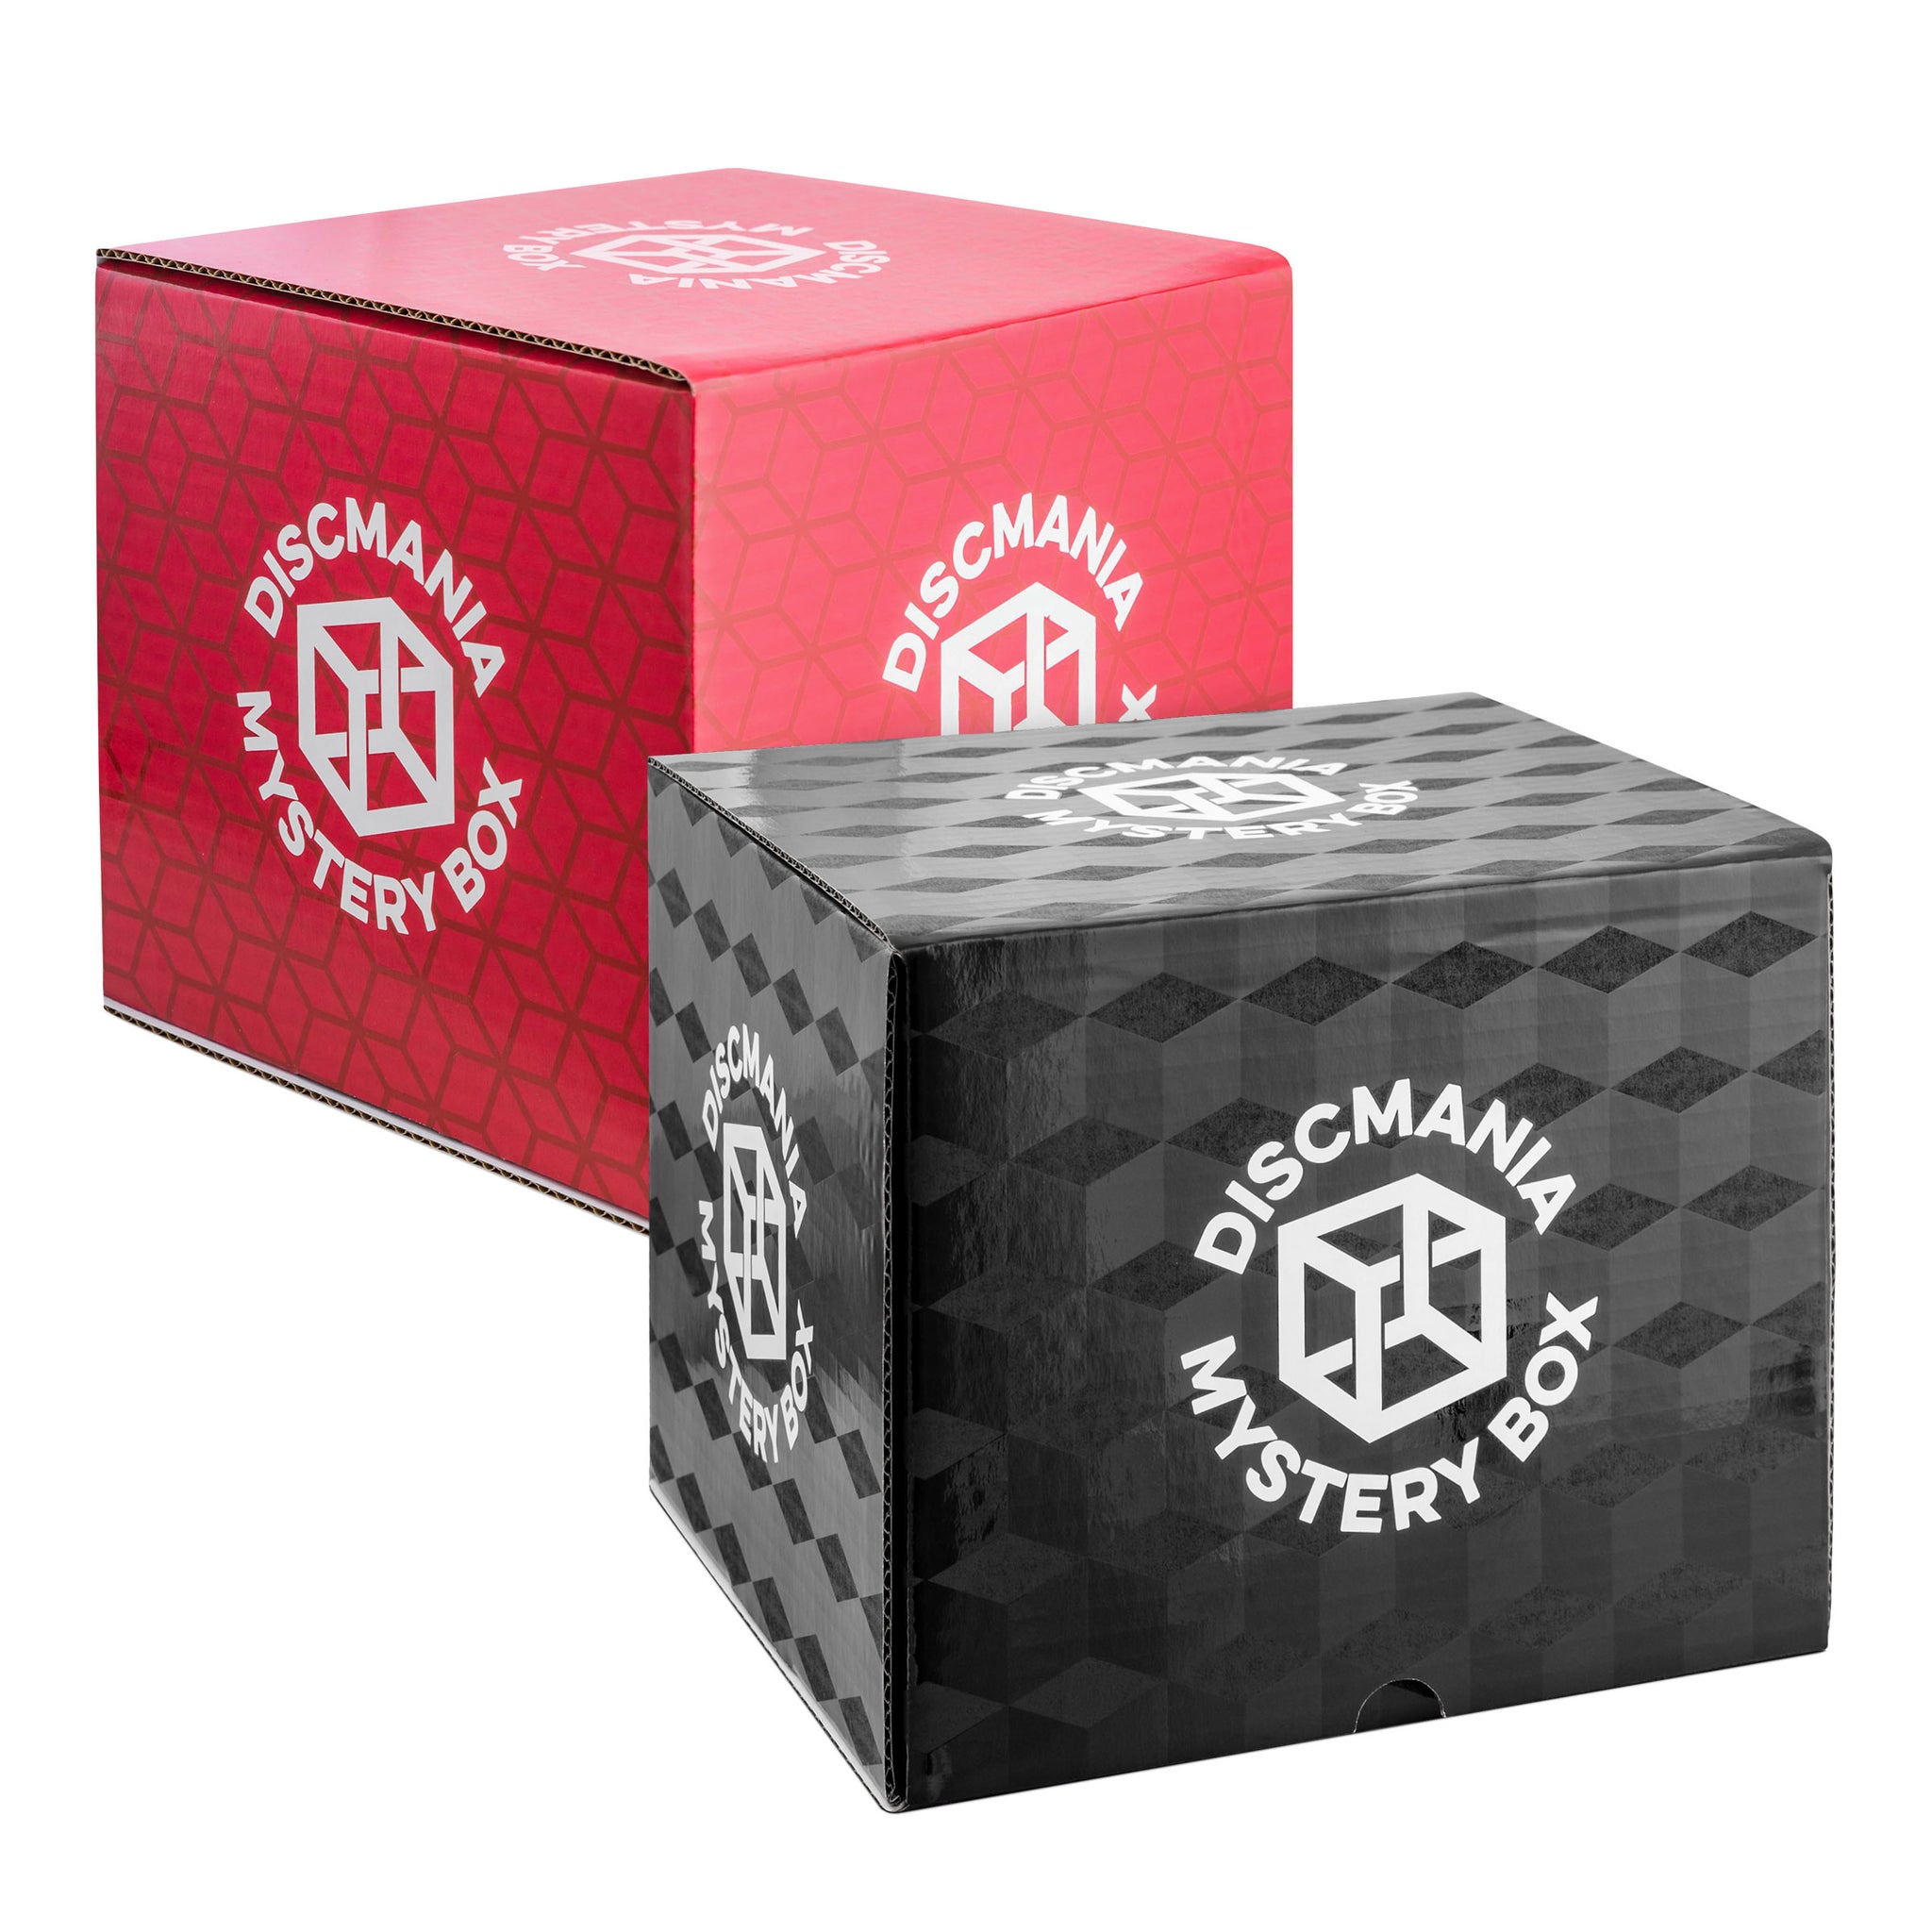 Discmania Mystery Box (Red Edition)